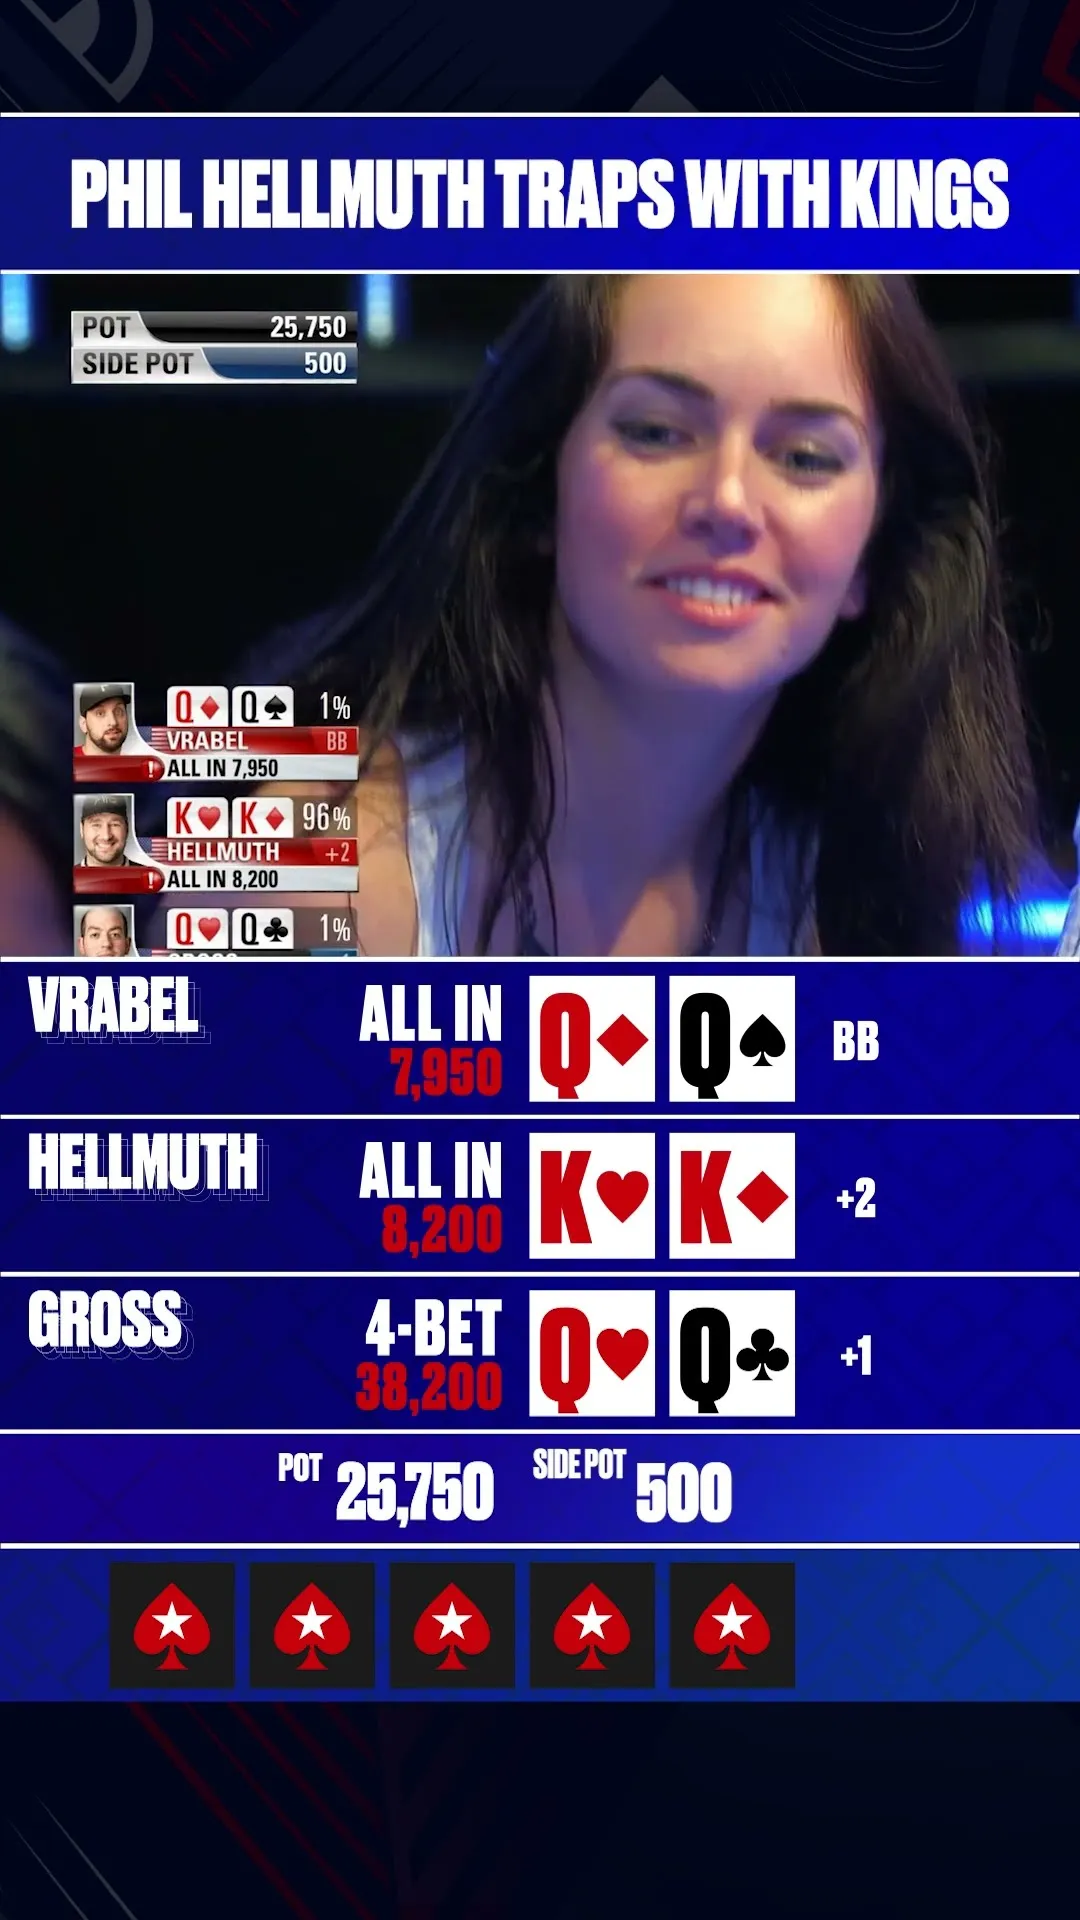 HE FINDS KK IN A VERY GOOD SPOT 😲 #Hellmuth #PokerStars - YouTube